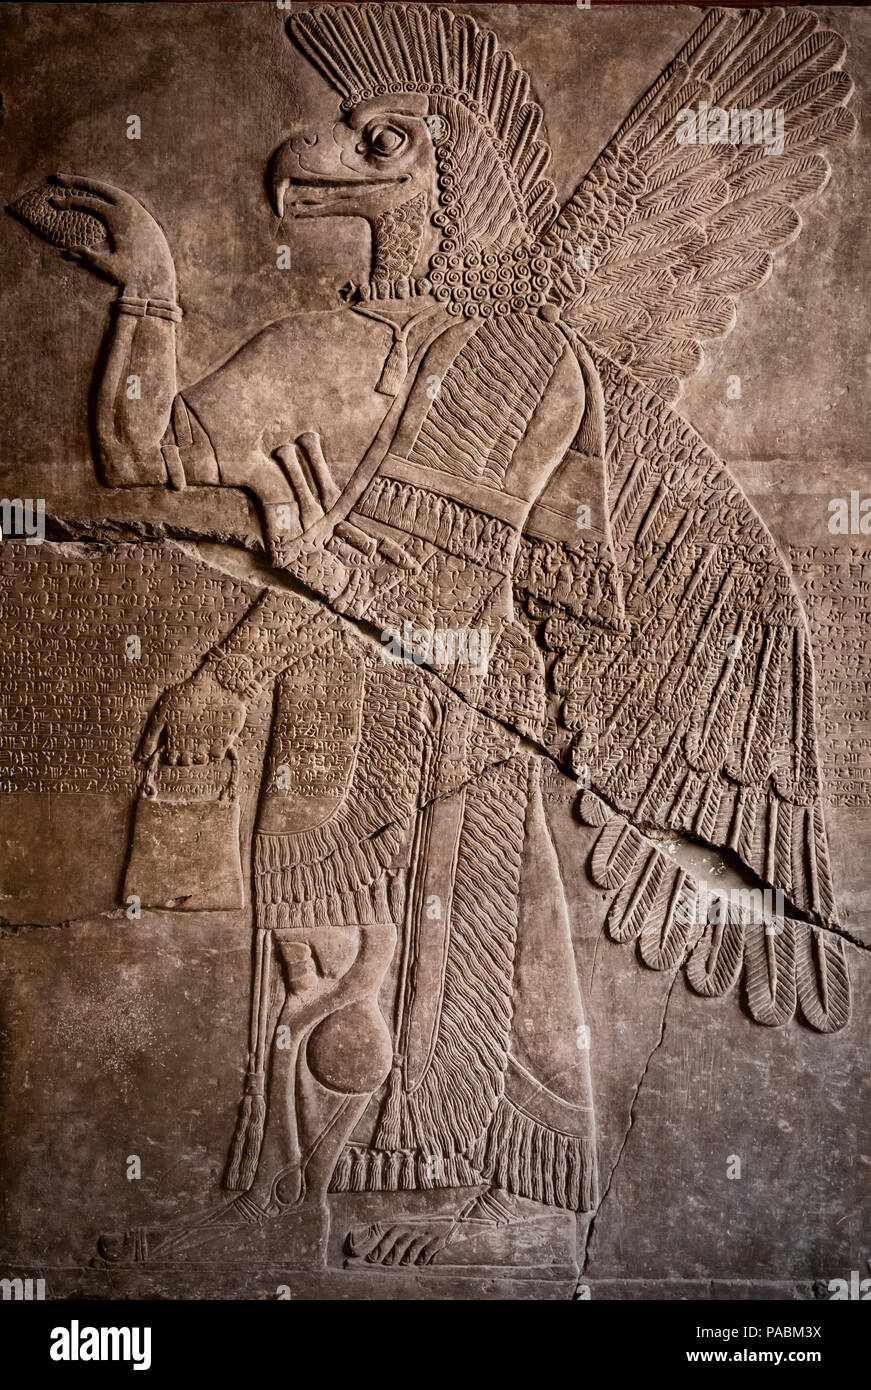 Assyrische CARVING (9-13 th C BCE) PERGAMONMUSEUM MUSEUMSINSEL BERLIN DEUTSCHLAND Stockfoto